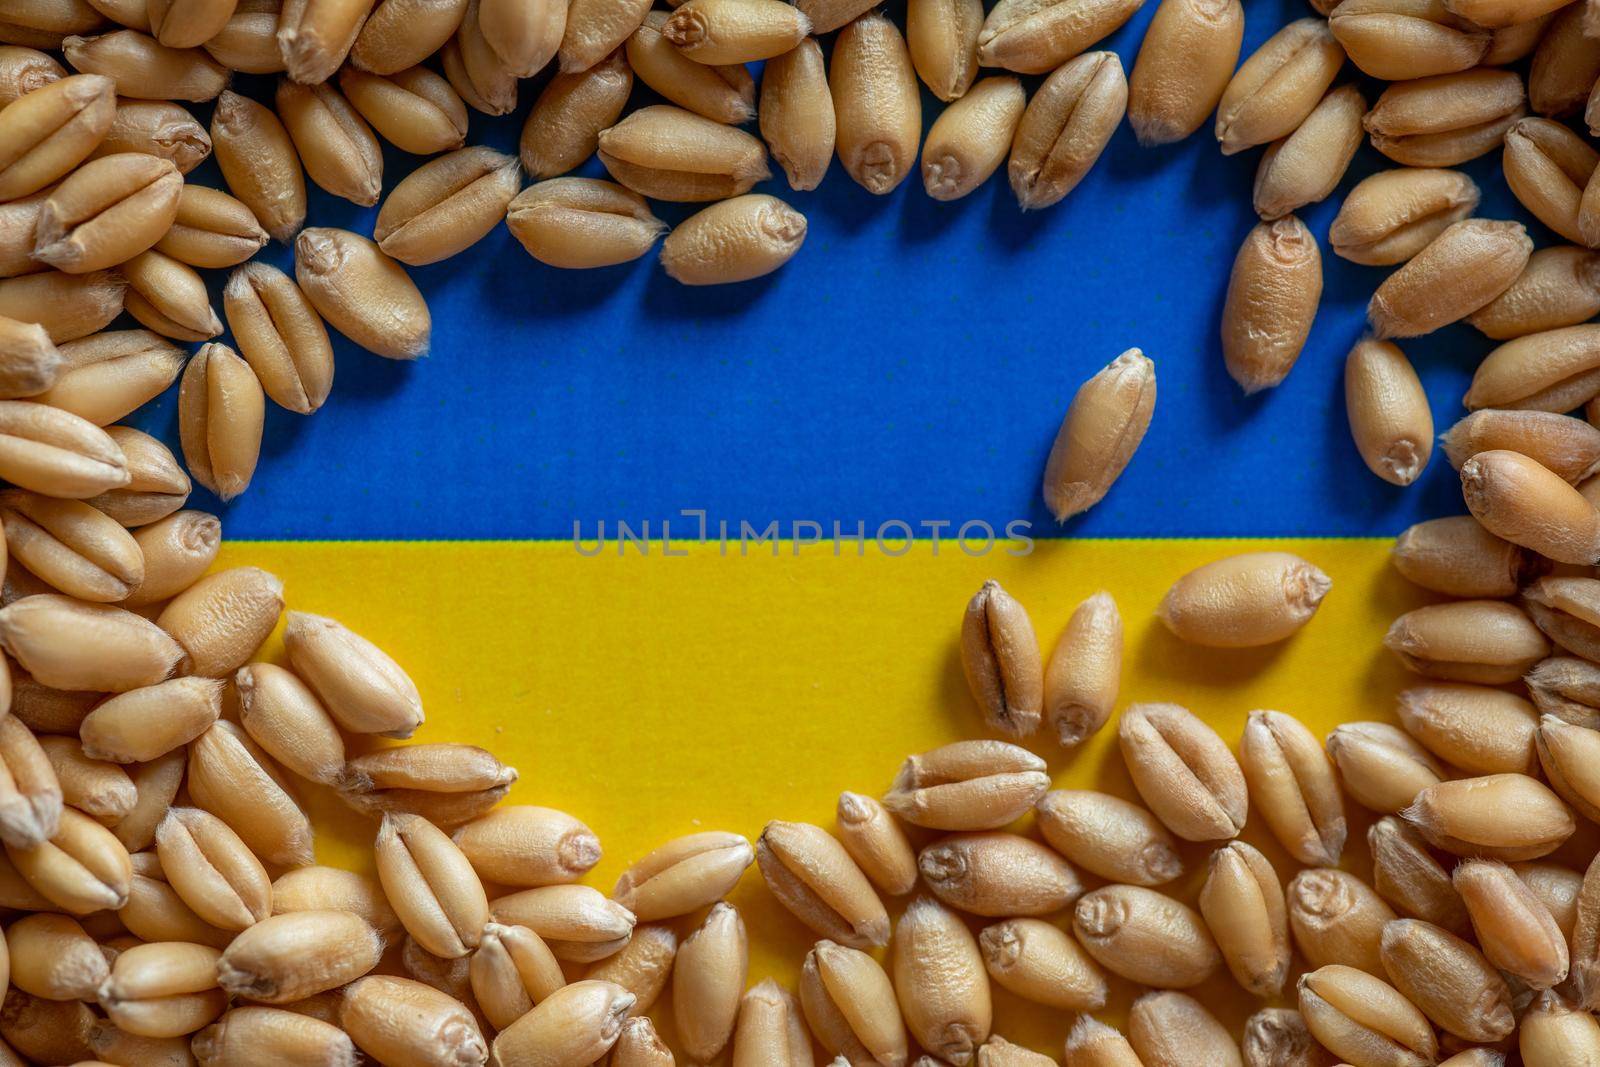 Wheat grain on Ukraine flag. Concept of grain floating export problems